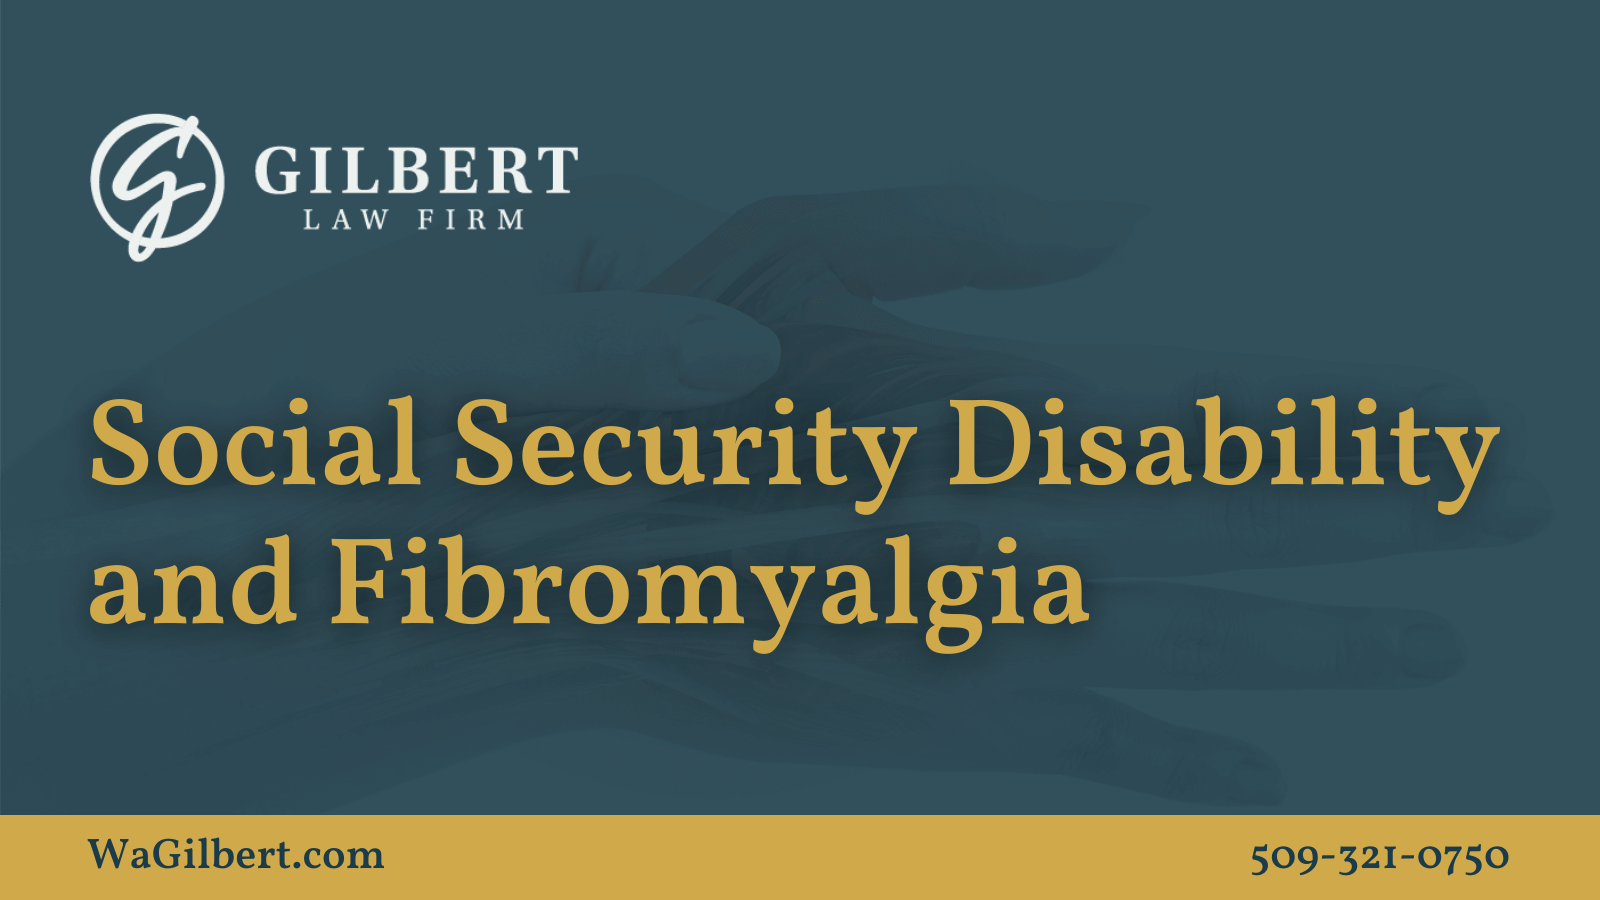 Social Security Disability and Fibromyalgia - Gilbert Law Firm Spokane Washington